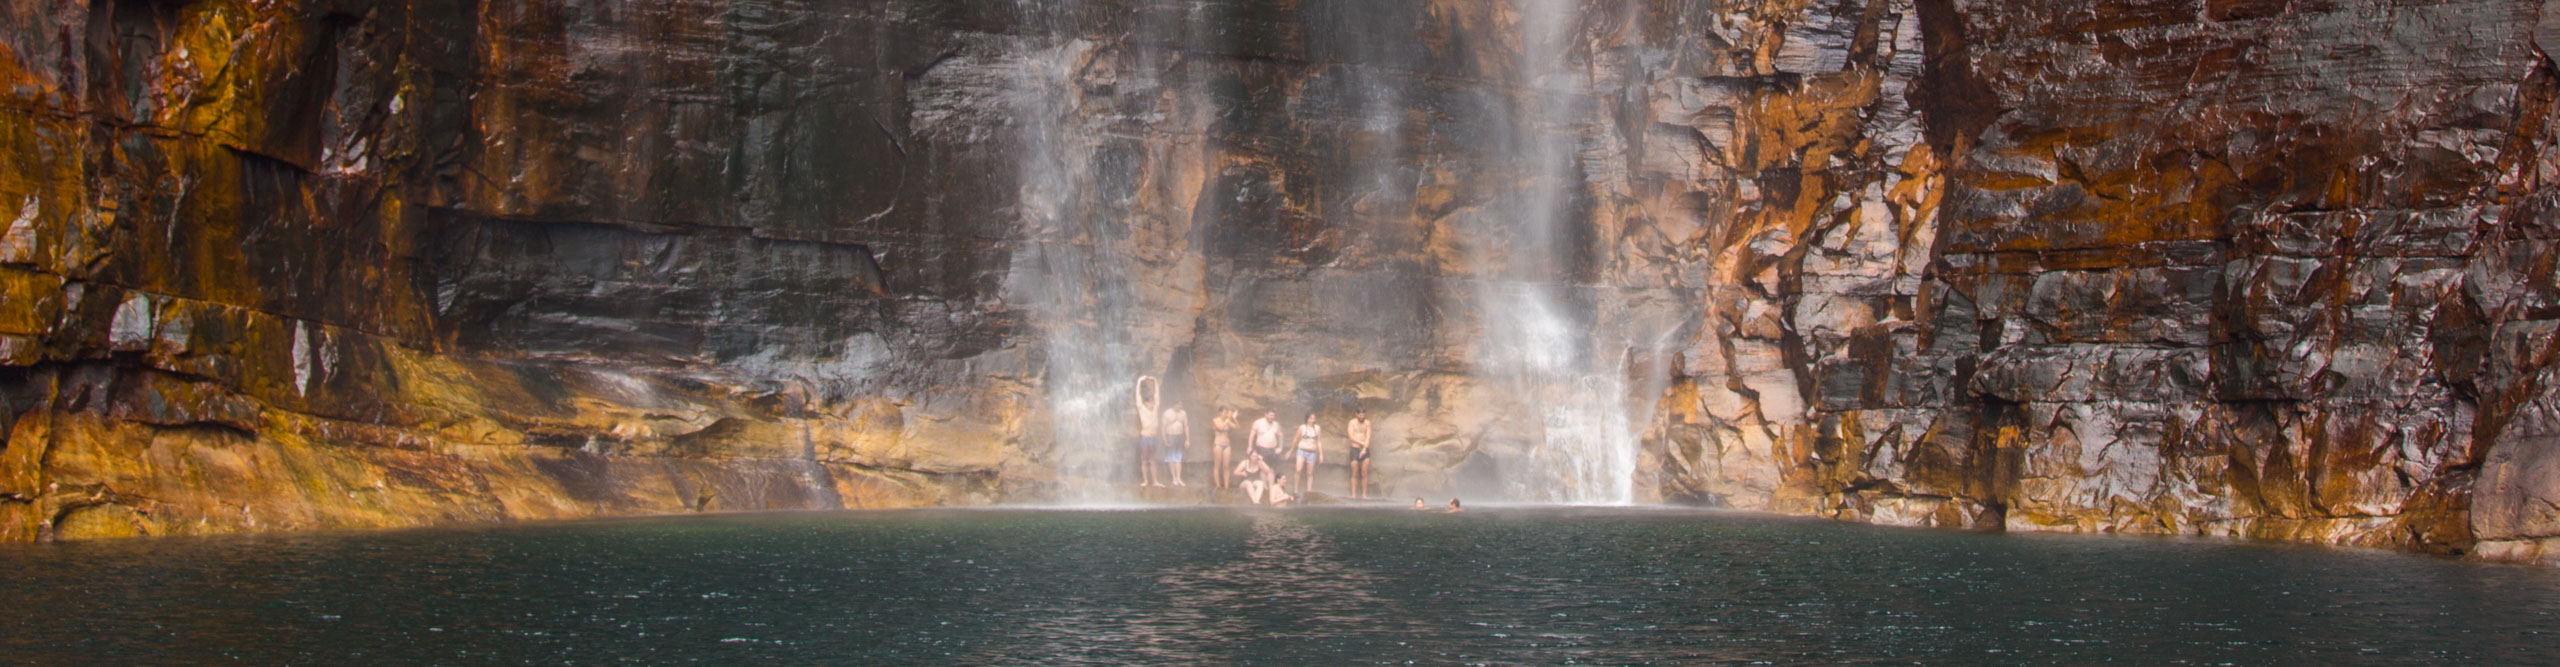 Group swimming at Jim Jim Falls, Kadadu, Northern Territory, Australia 